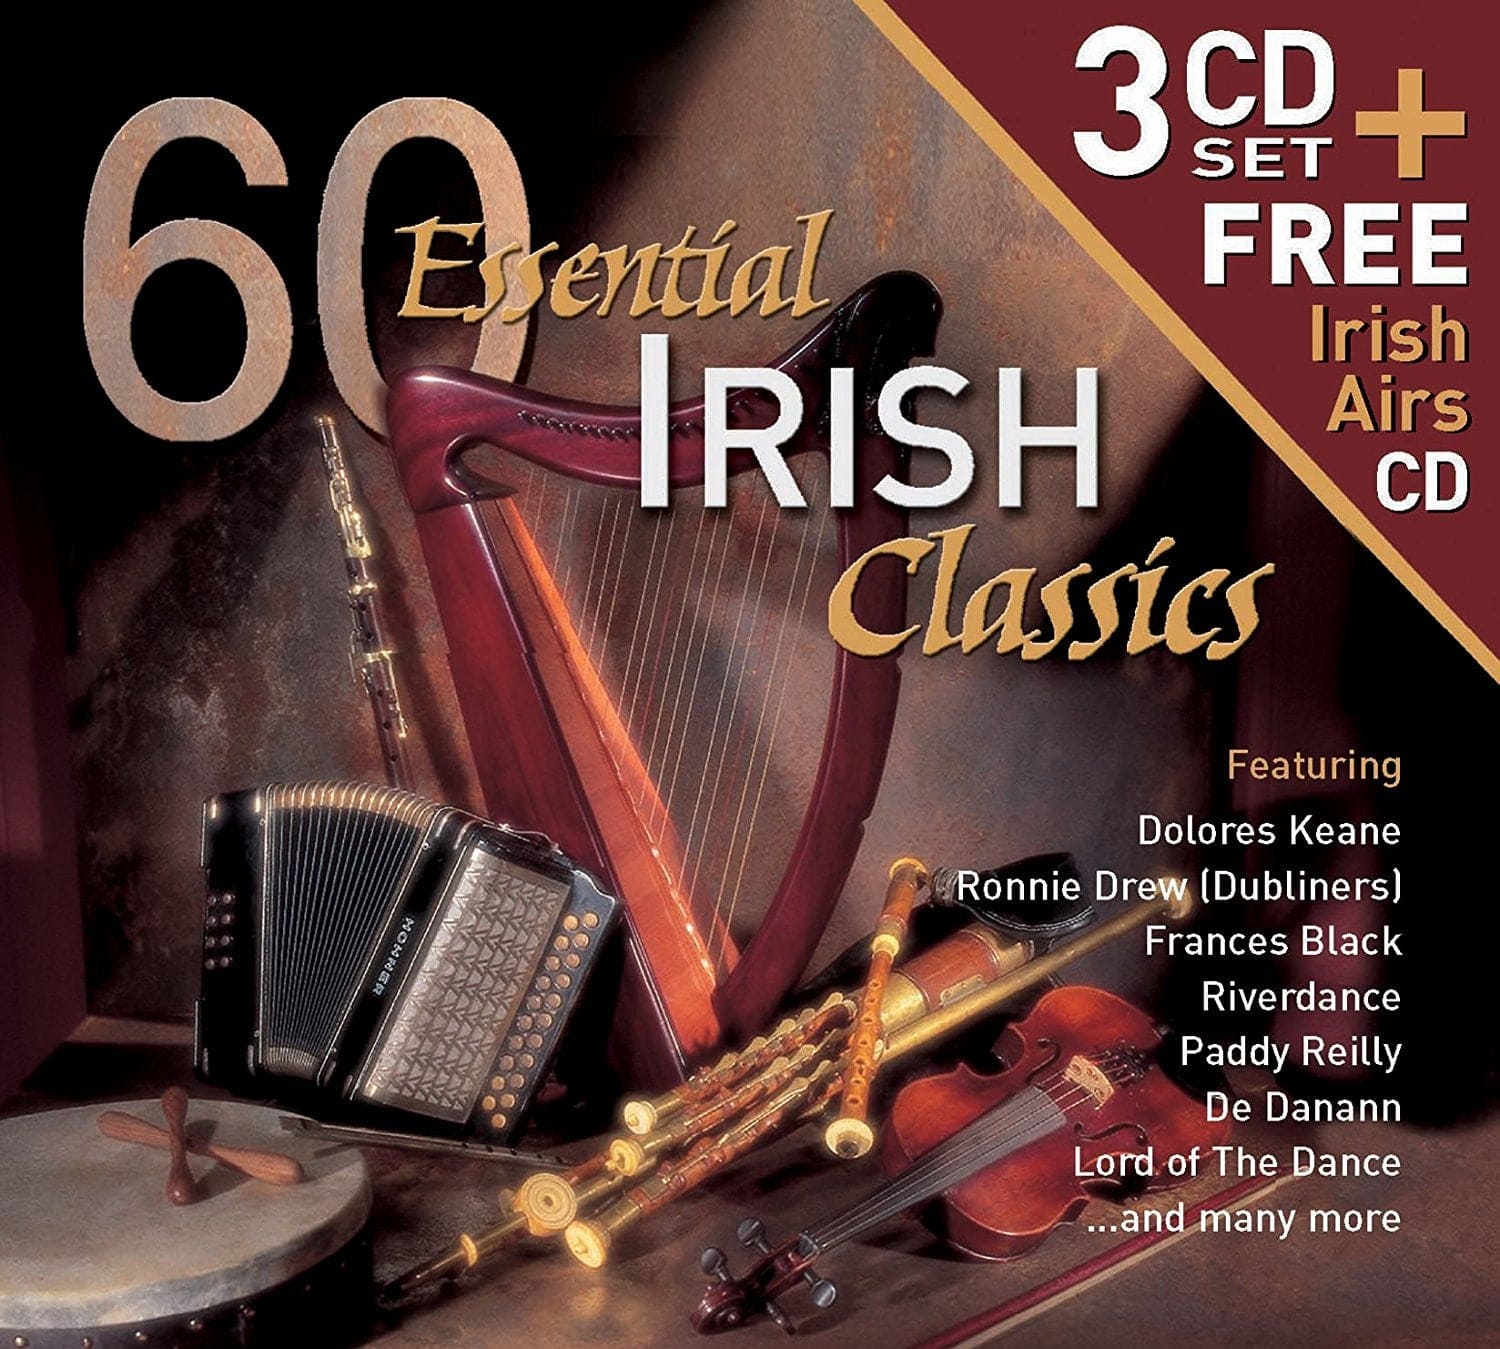 60 Essential Irish Classics - Various Artists [3CD + Free CD]